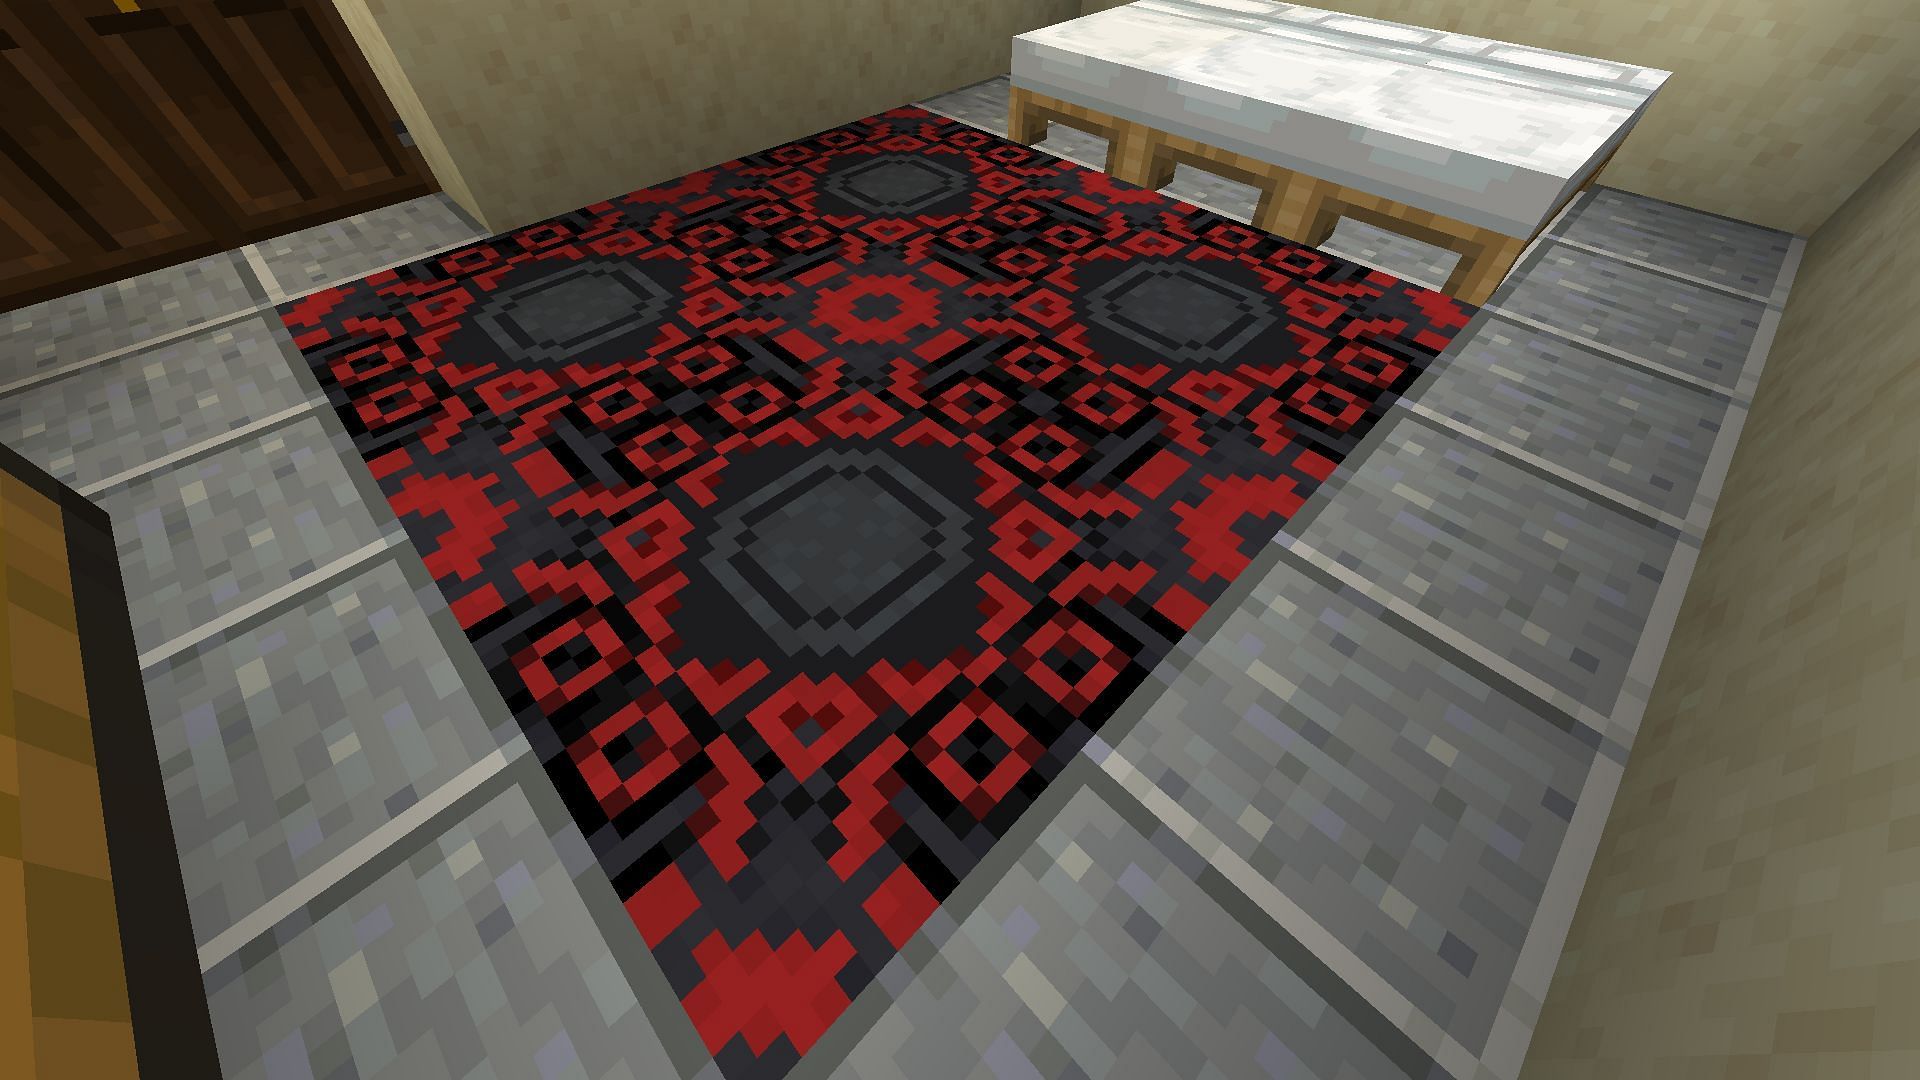 Black glazed terracotta adds detail to the floor (Image via Minecraft)